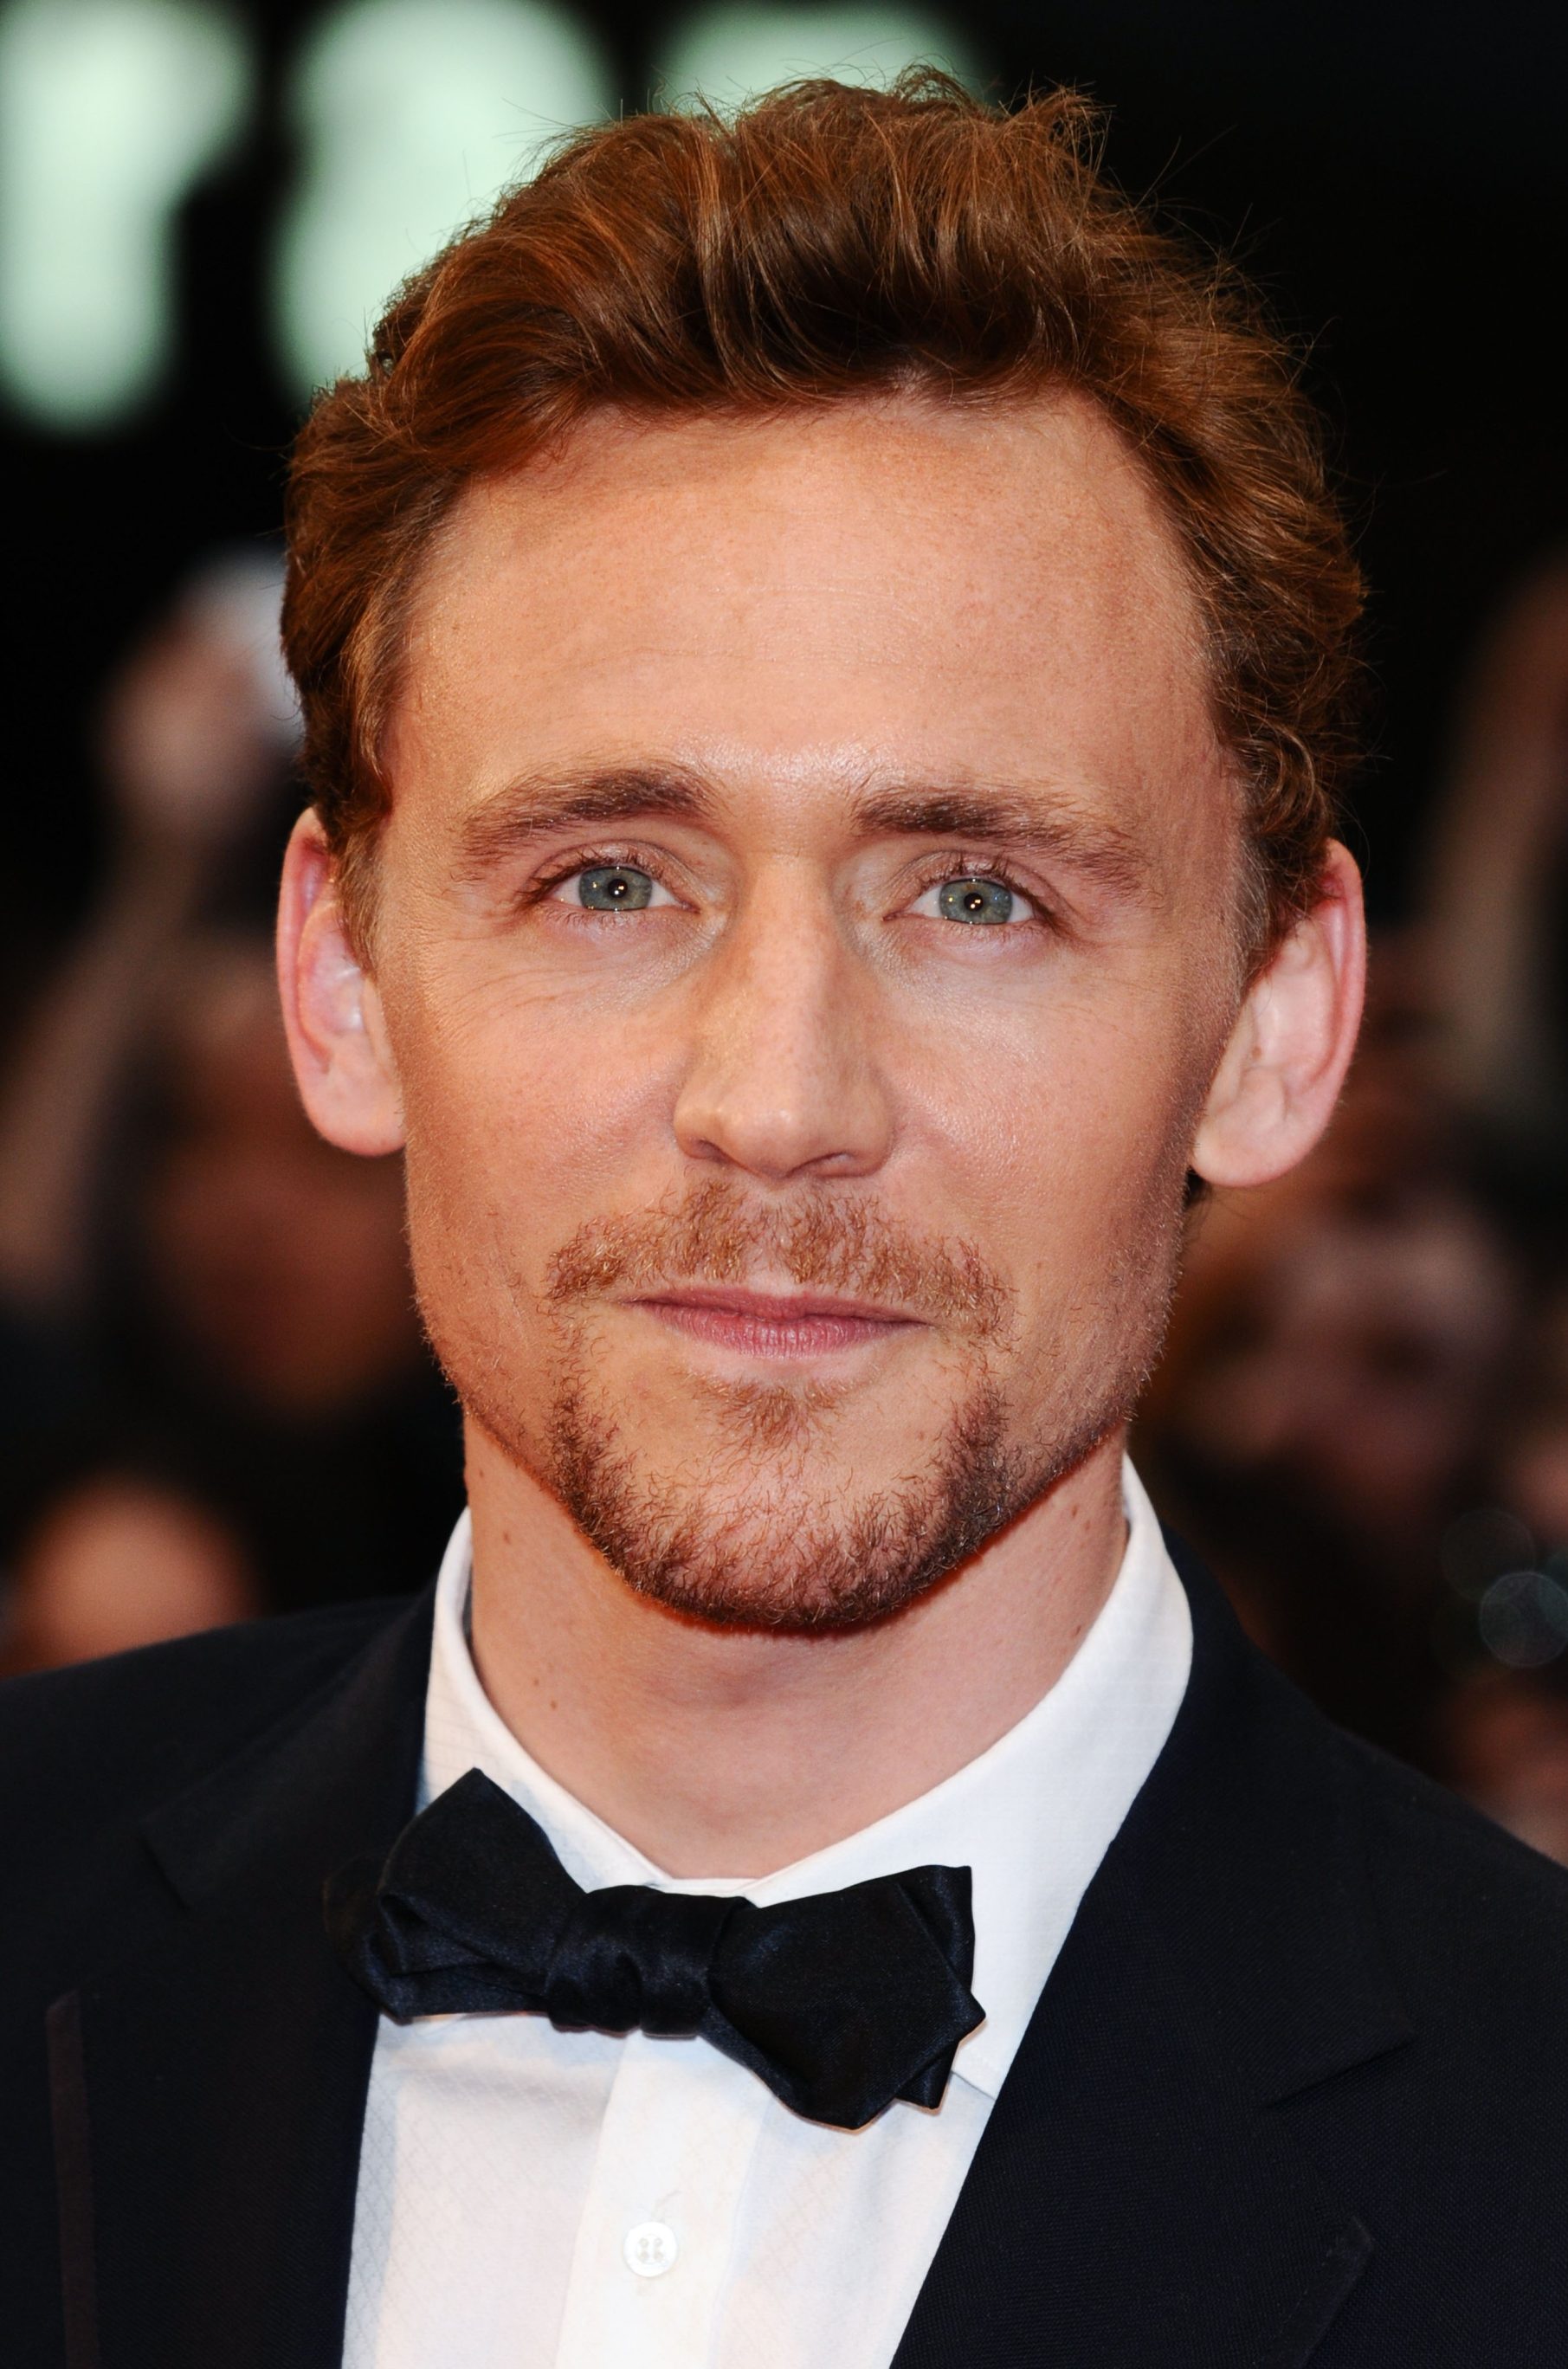 Tom Hiddleston - English Actor
Tom Hiddleston